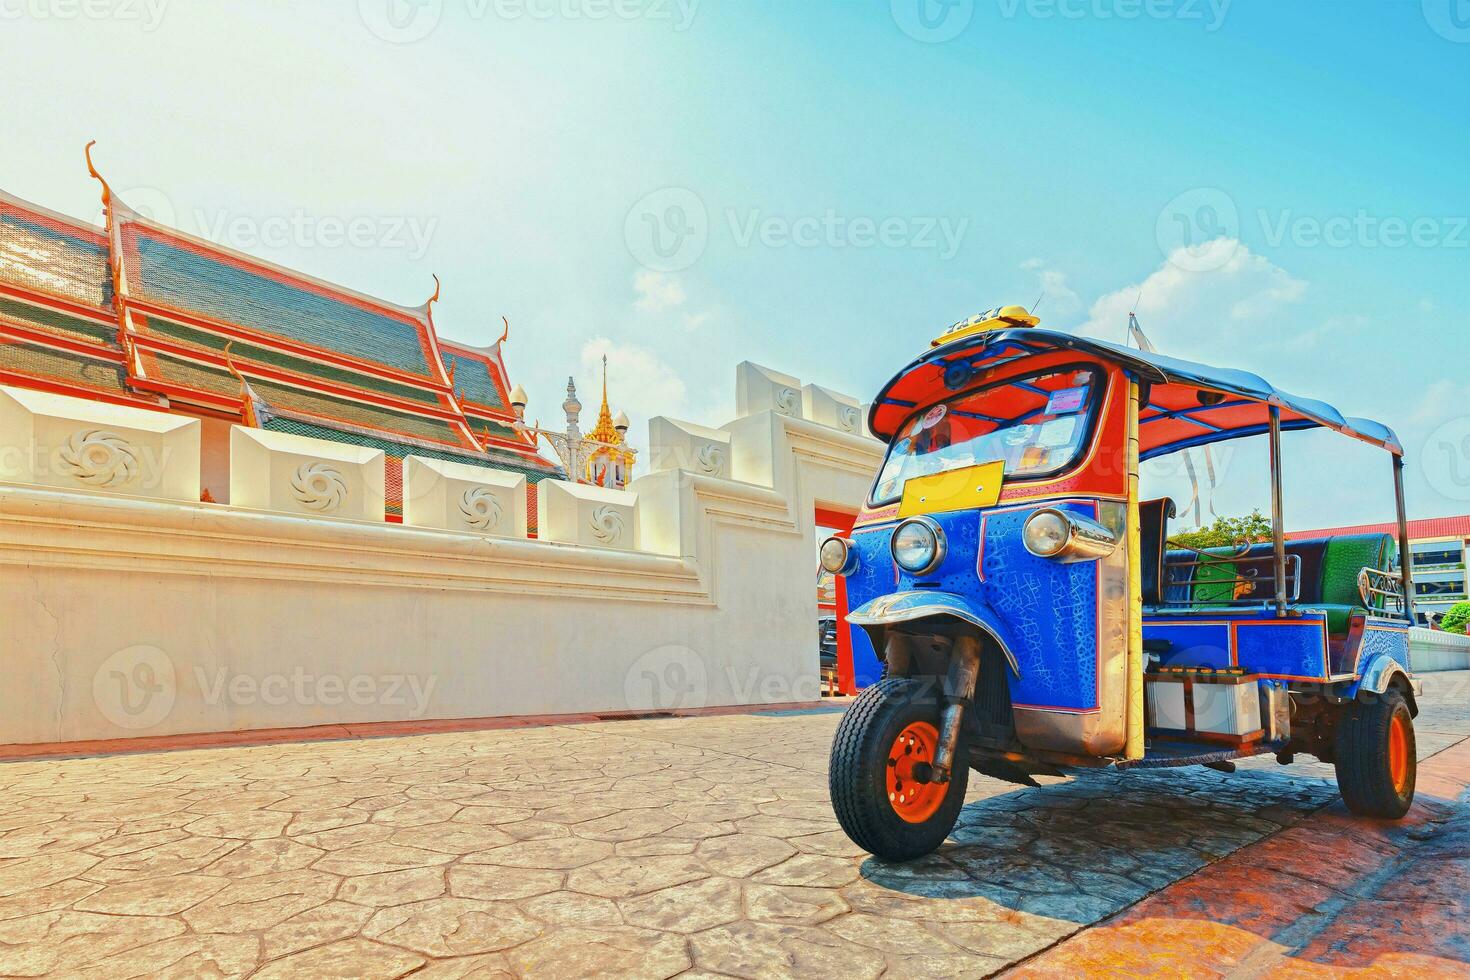 azul tuk tuk, tailandés tradicional Taxi en Bangkok tailandia foto